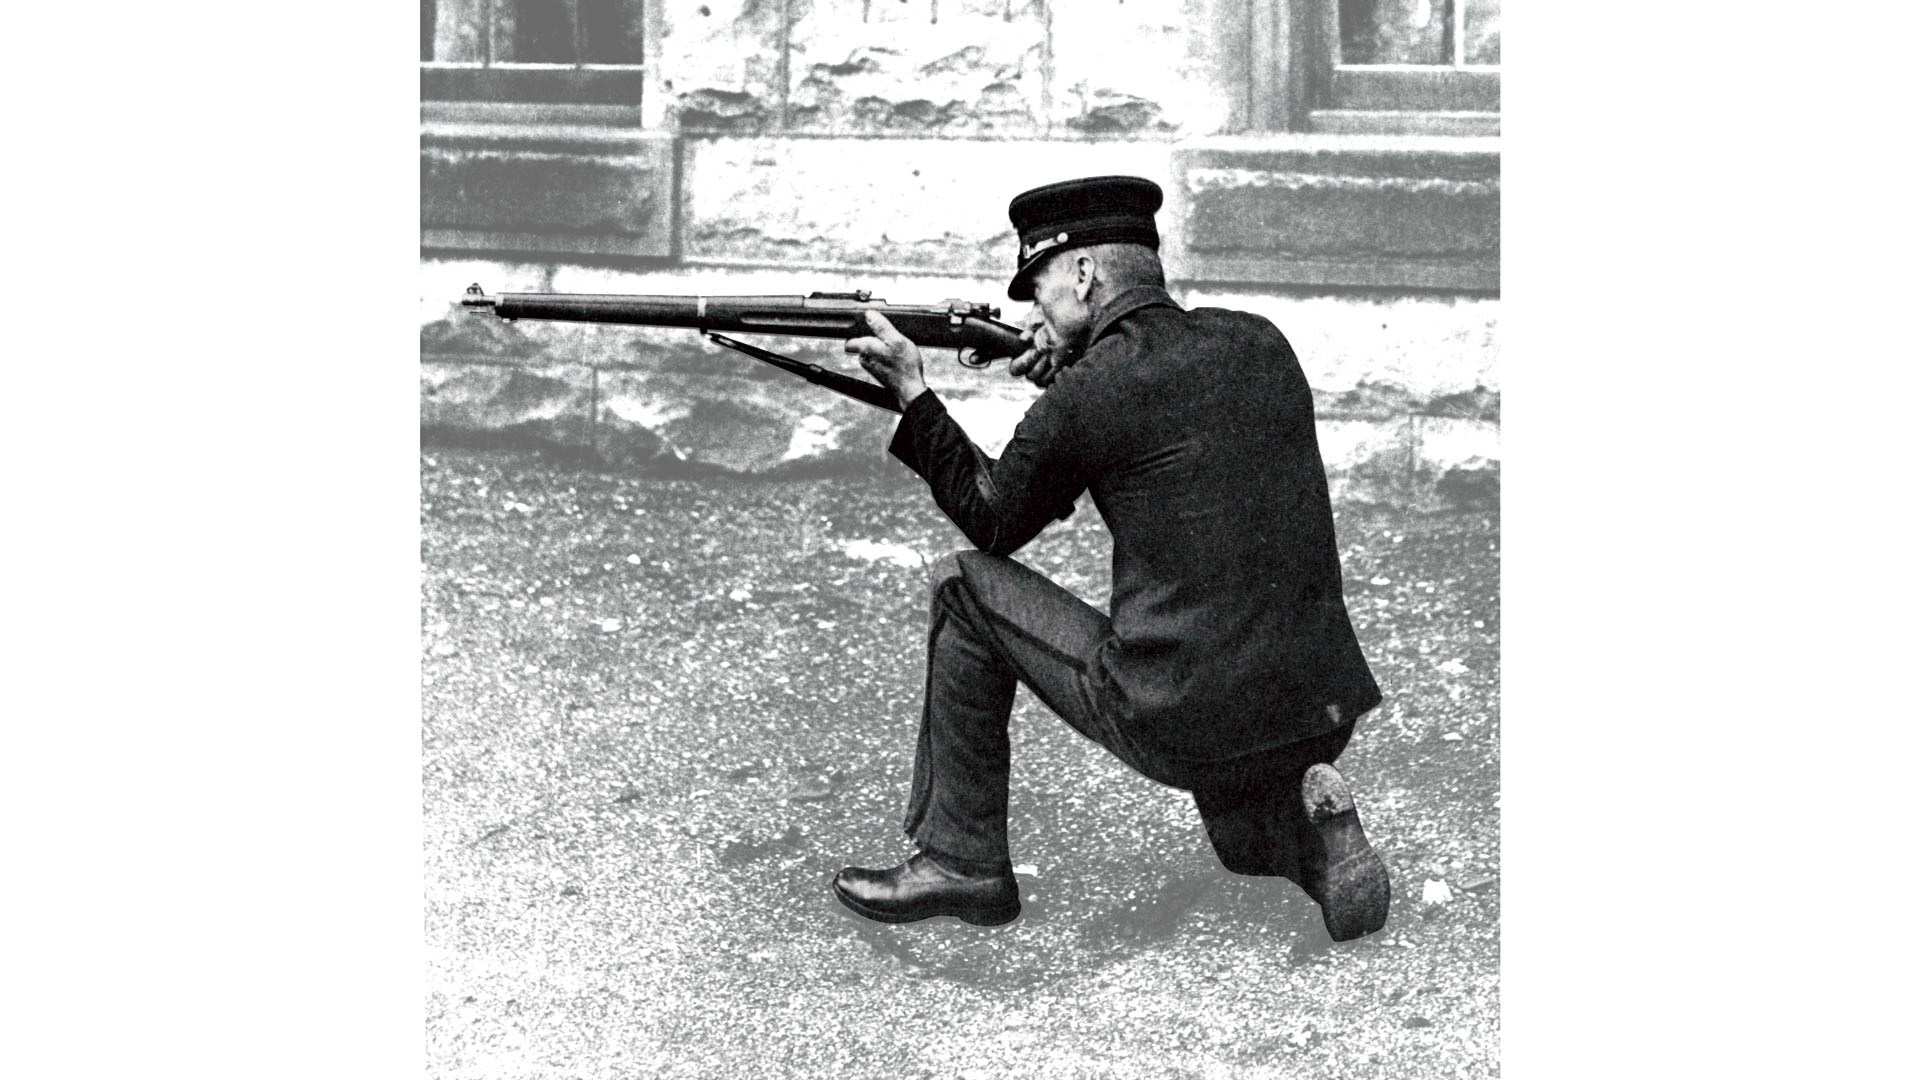 man shooting rifle kneeling position